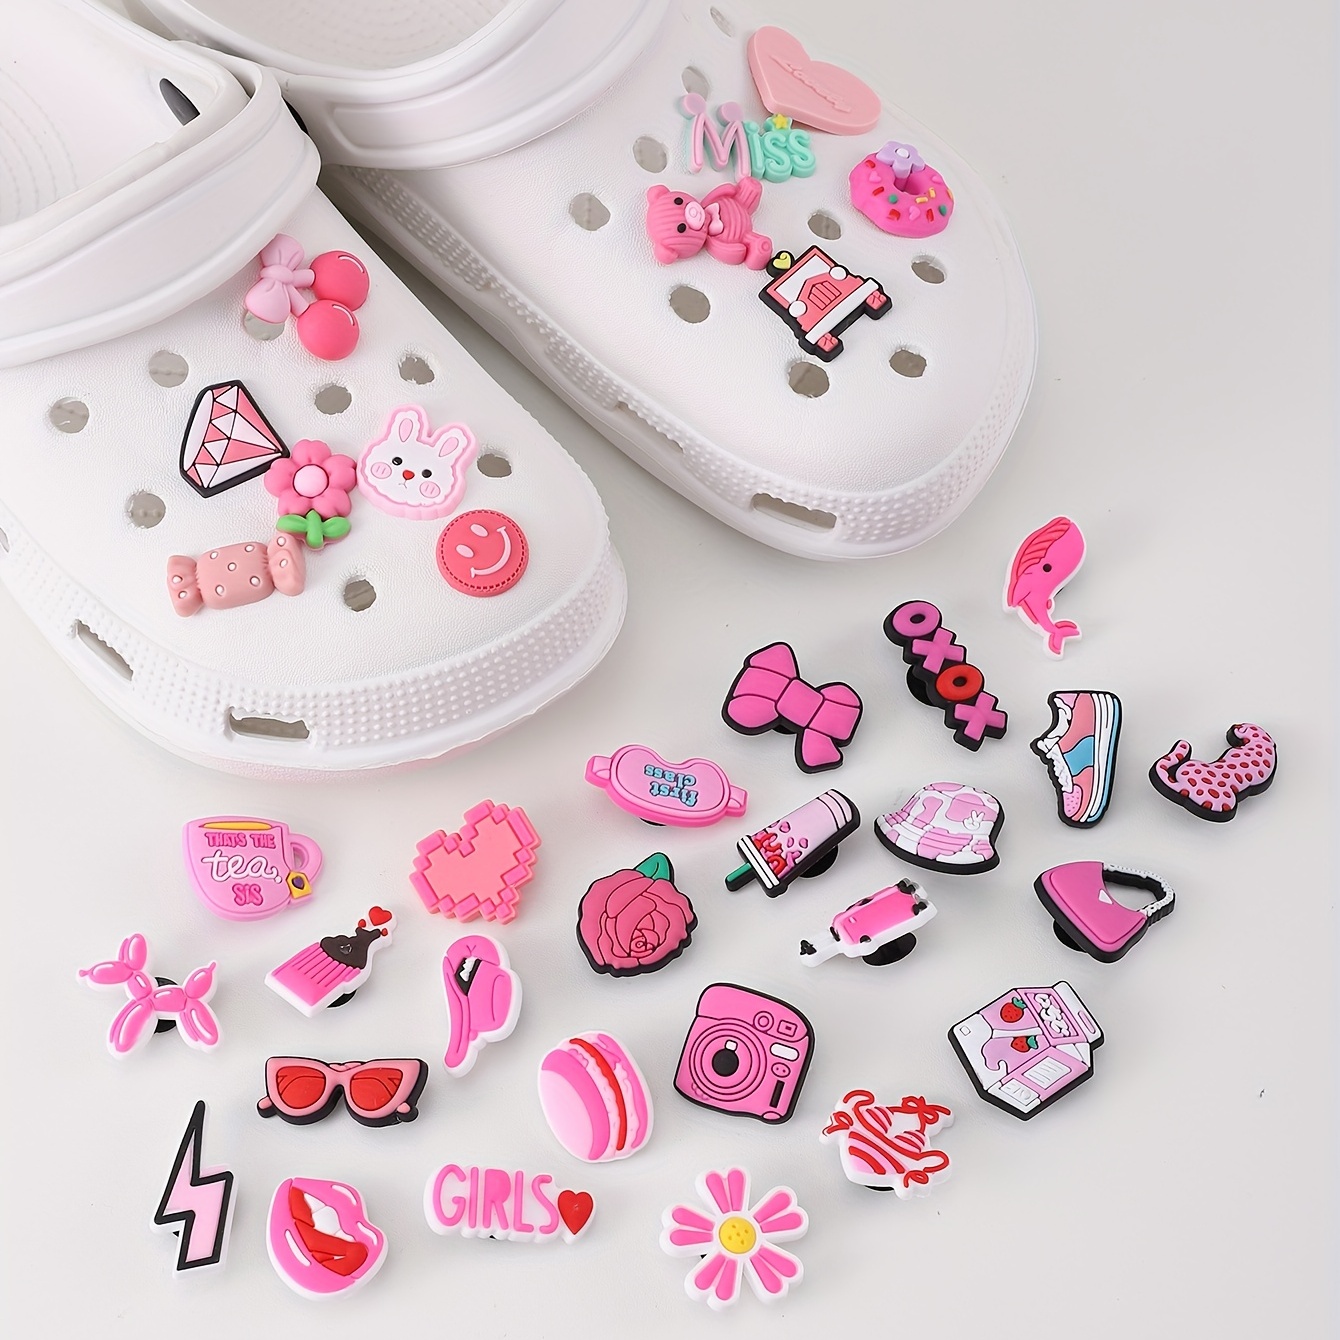 KAWAII Shoe Charms for Croc Clogs - DISNEY Character Balloons